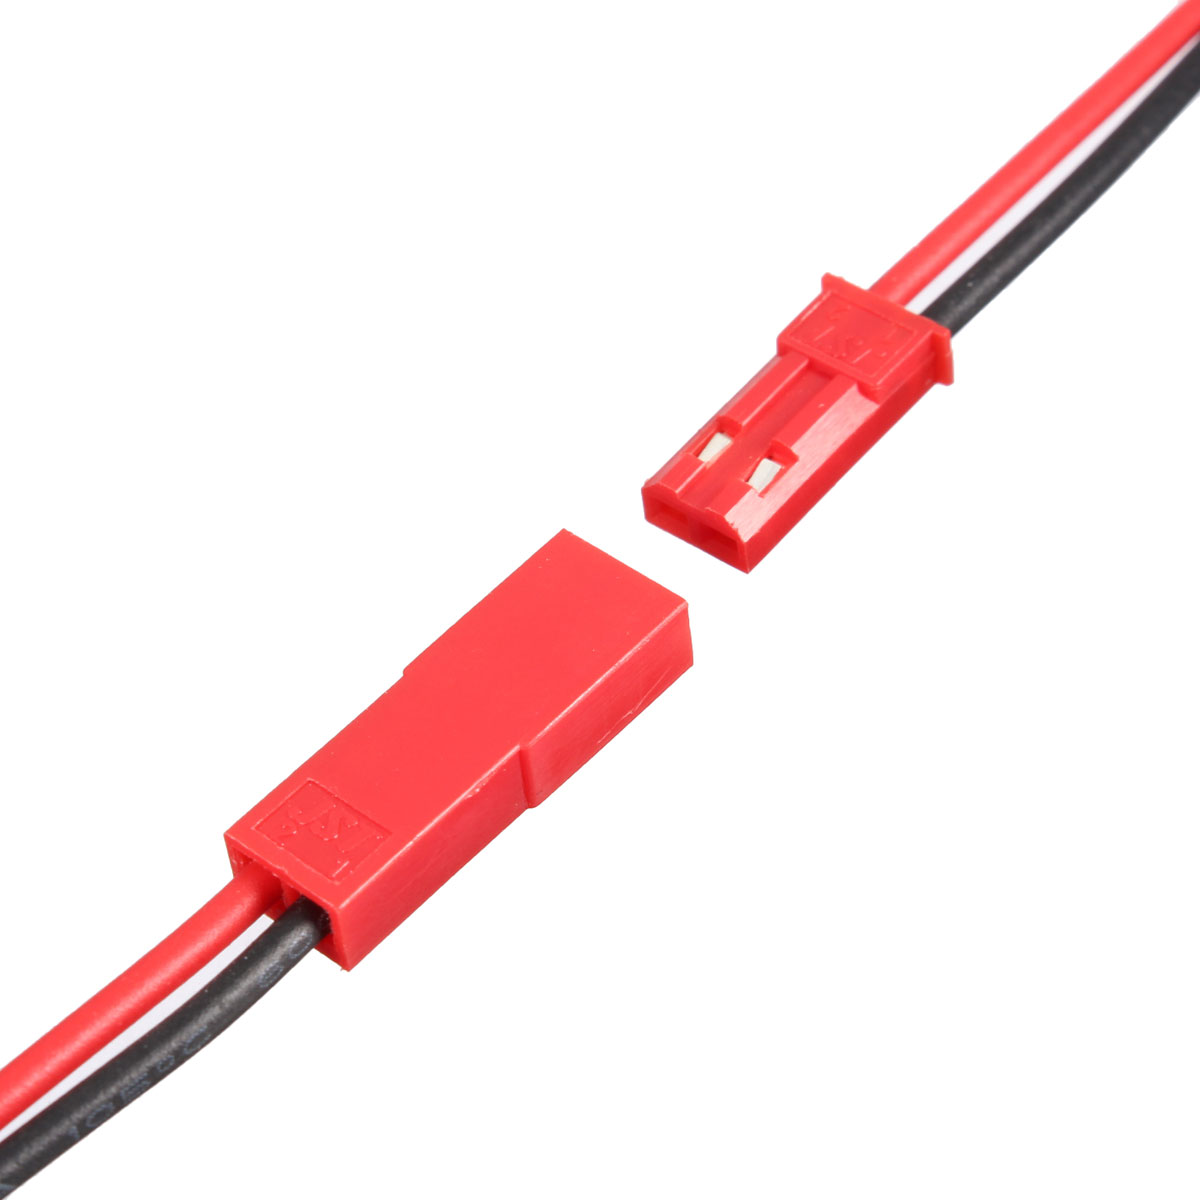 JST Connector Plug Cables